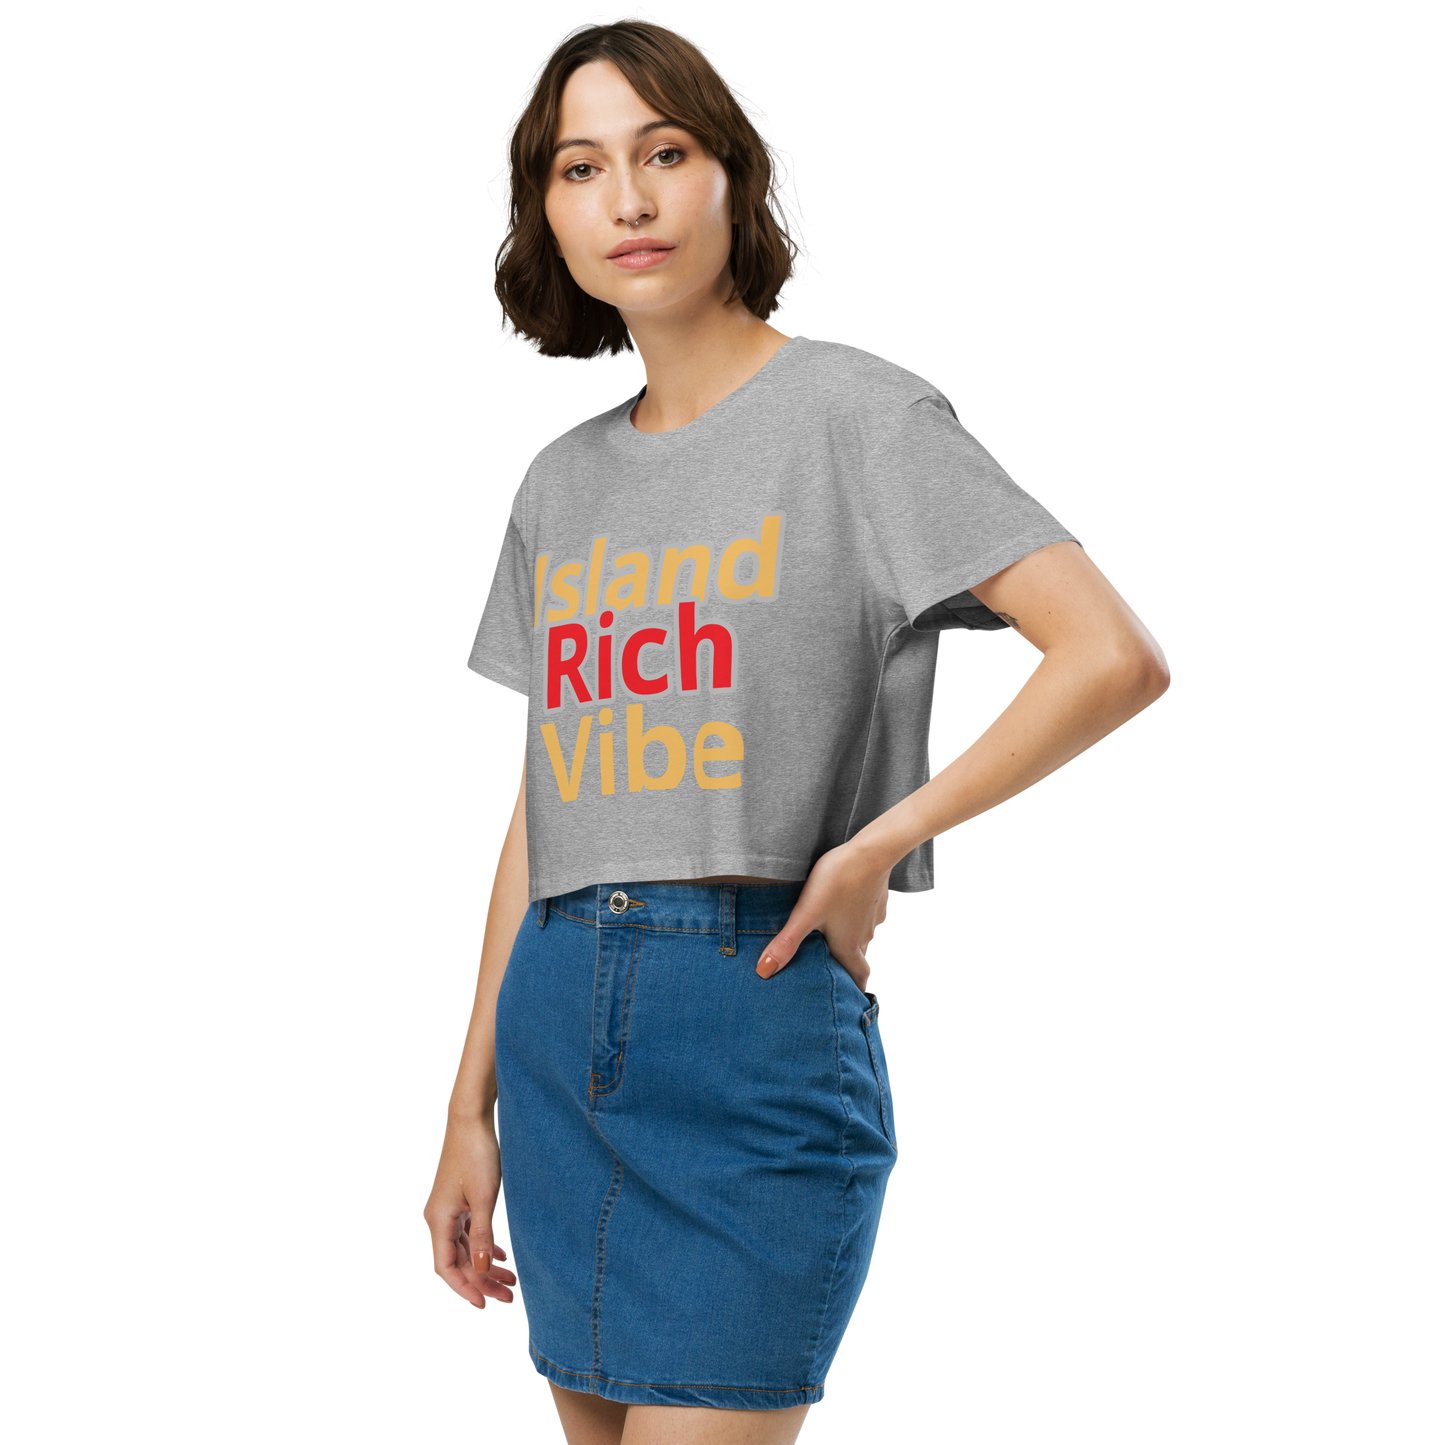 Women’s island Rich crop top